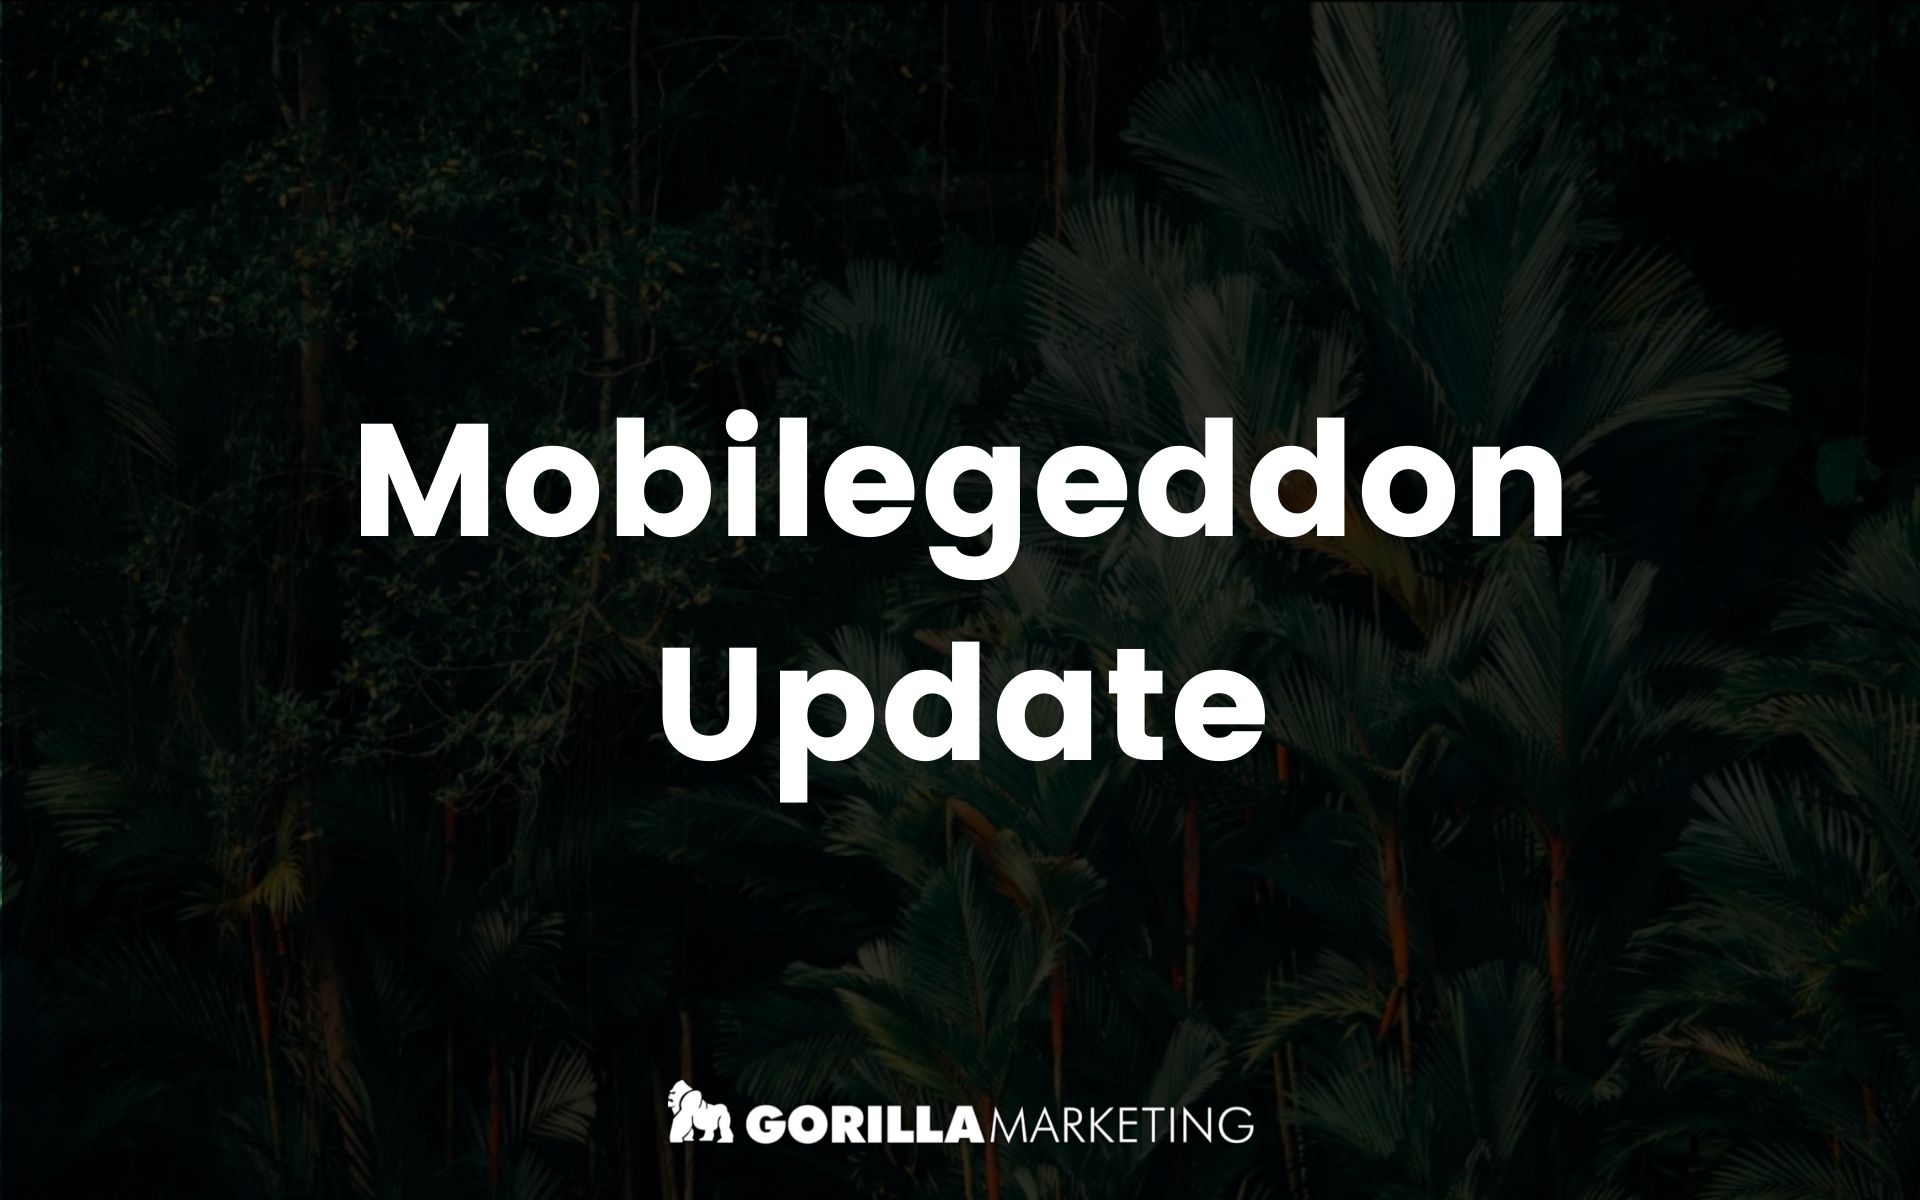 Mobilegeddon Update